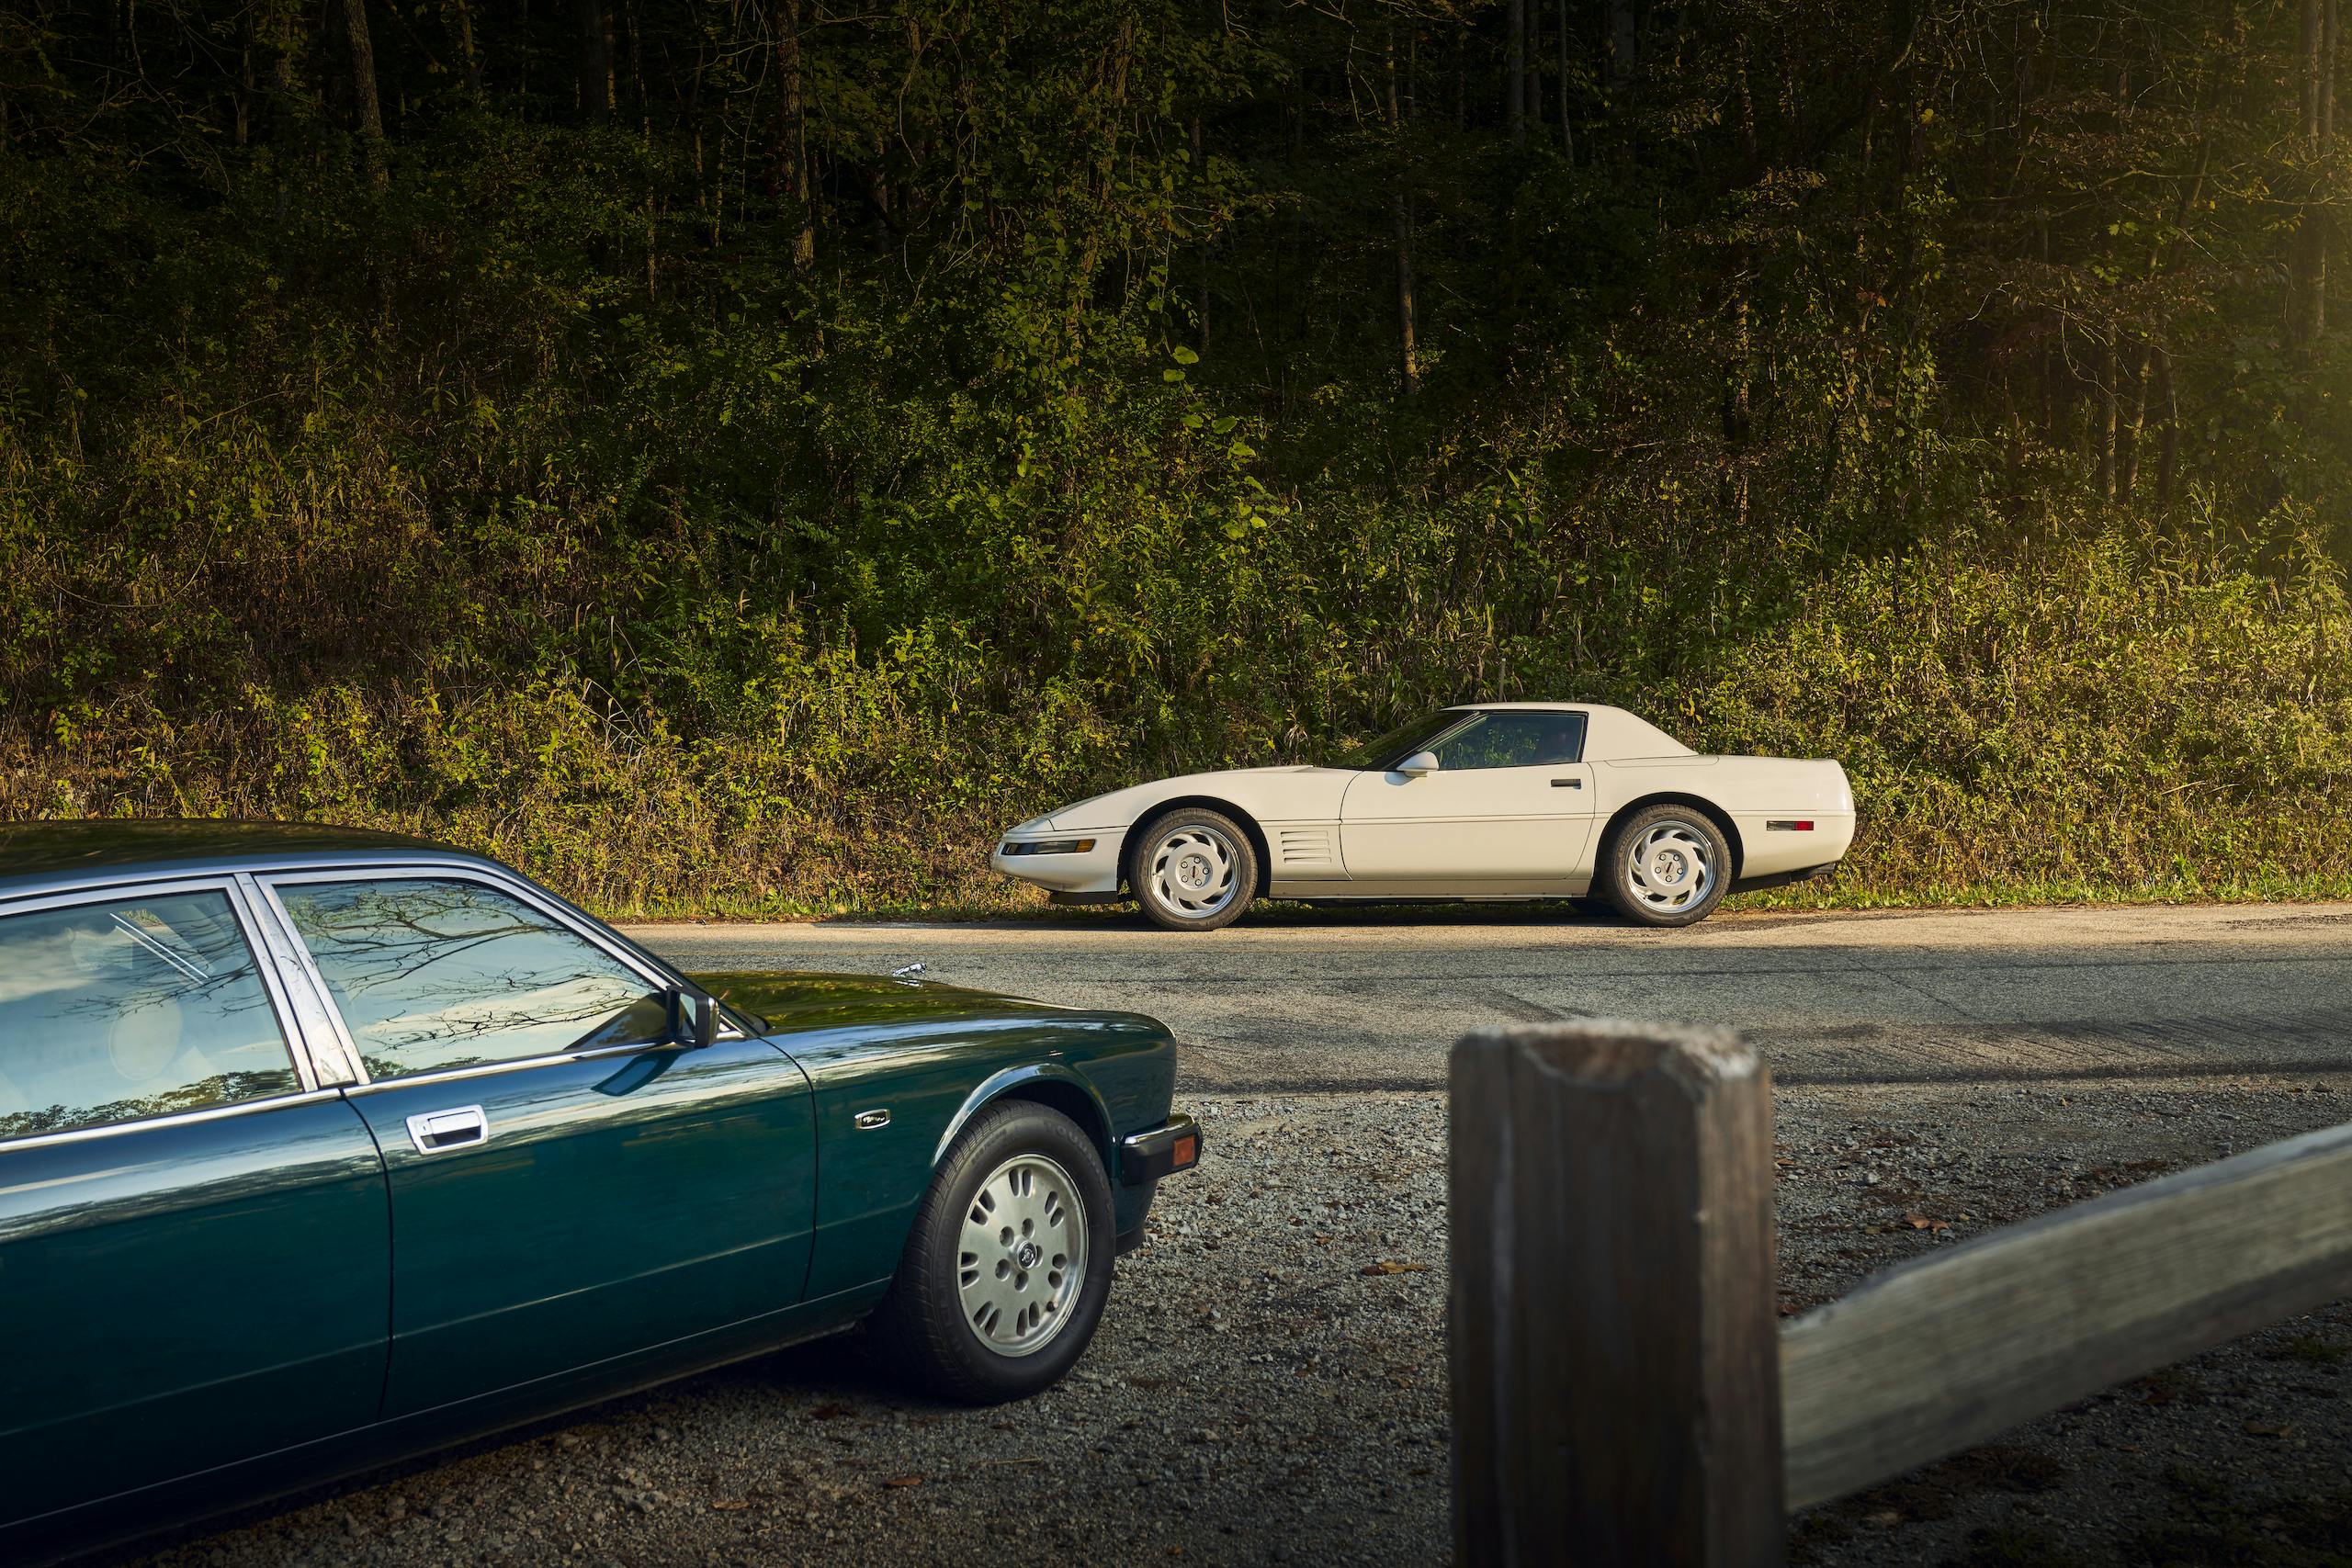 C4 Corvette and Jaguar XJ6 still